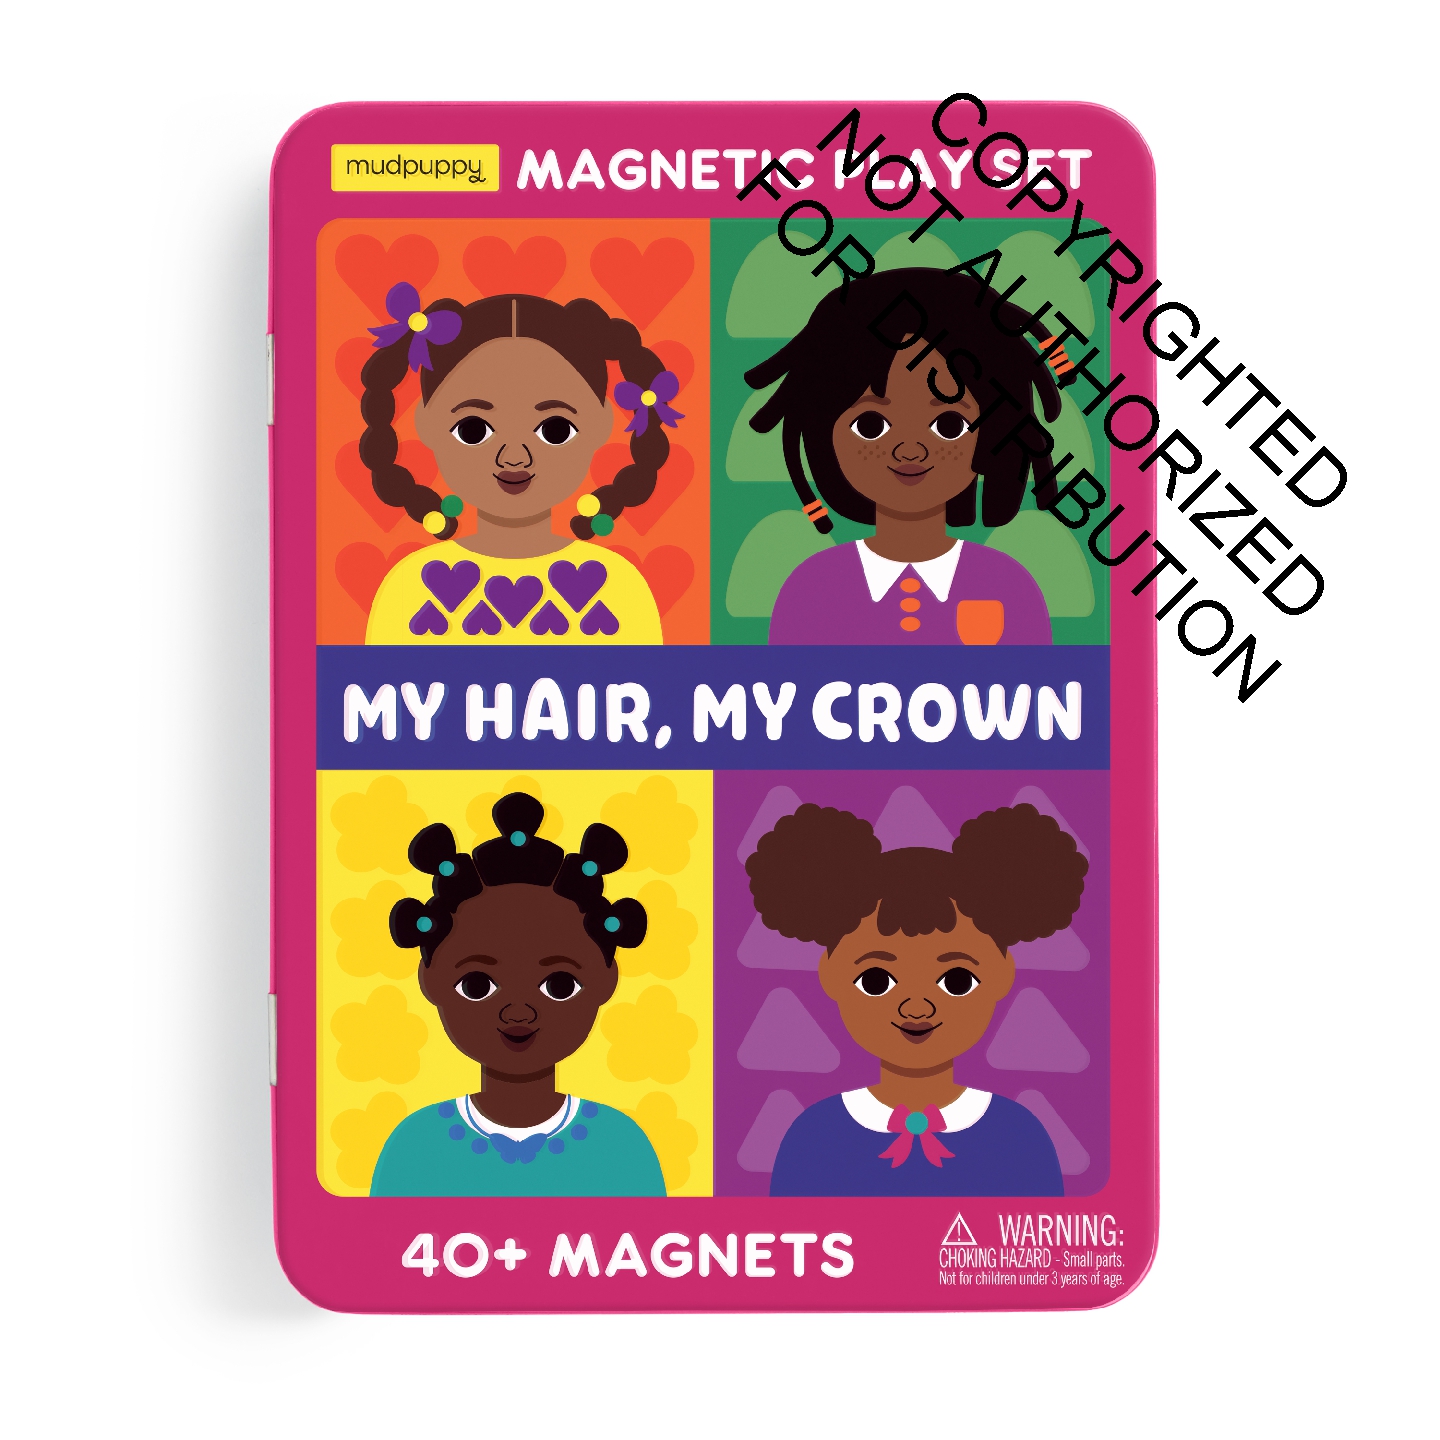 My Hair, My Crown Magnetic Play Set